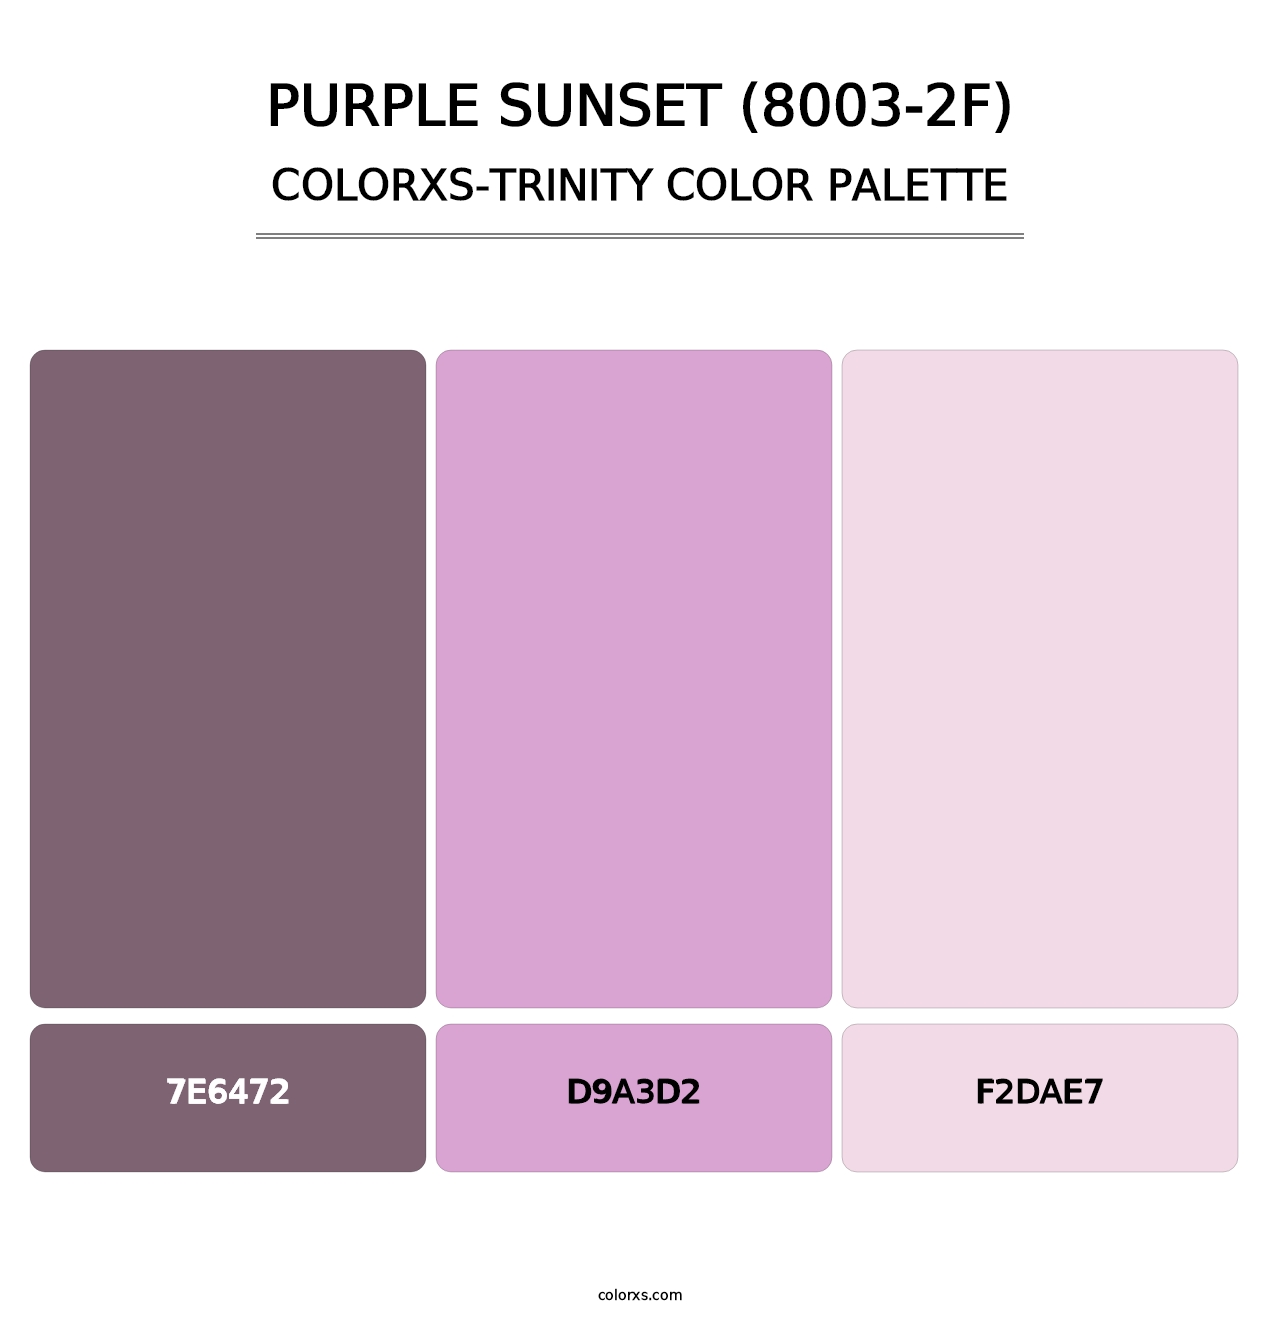 Purple Sunset (8003-2F) - Colorxs Trinity Palette